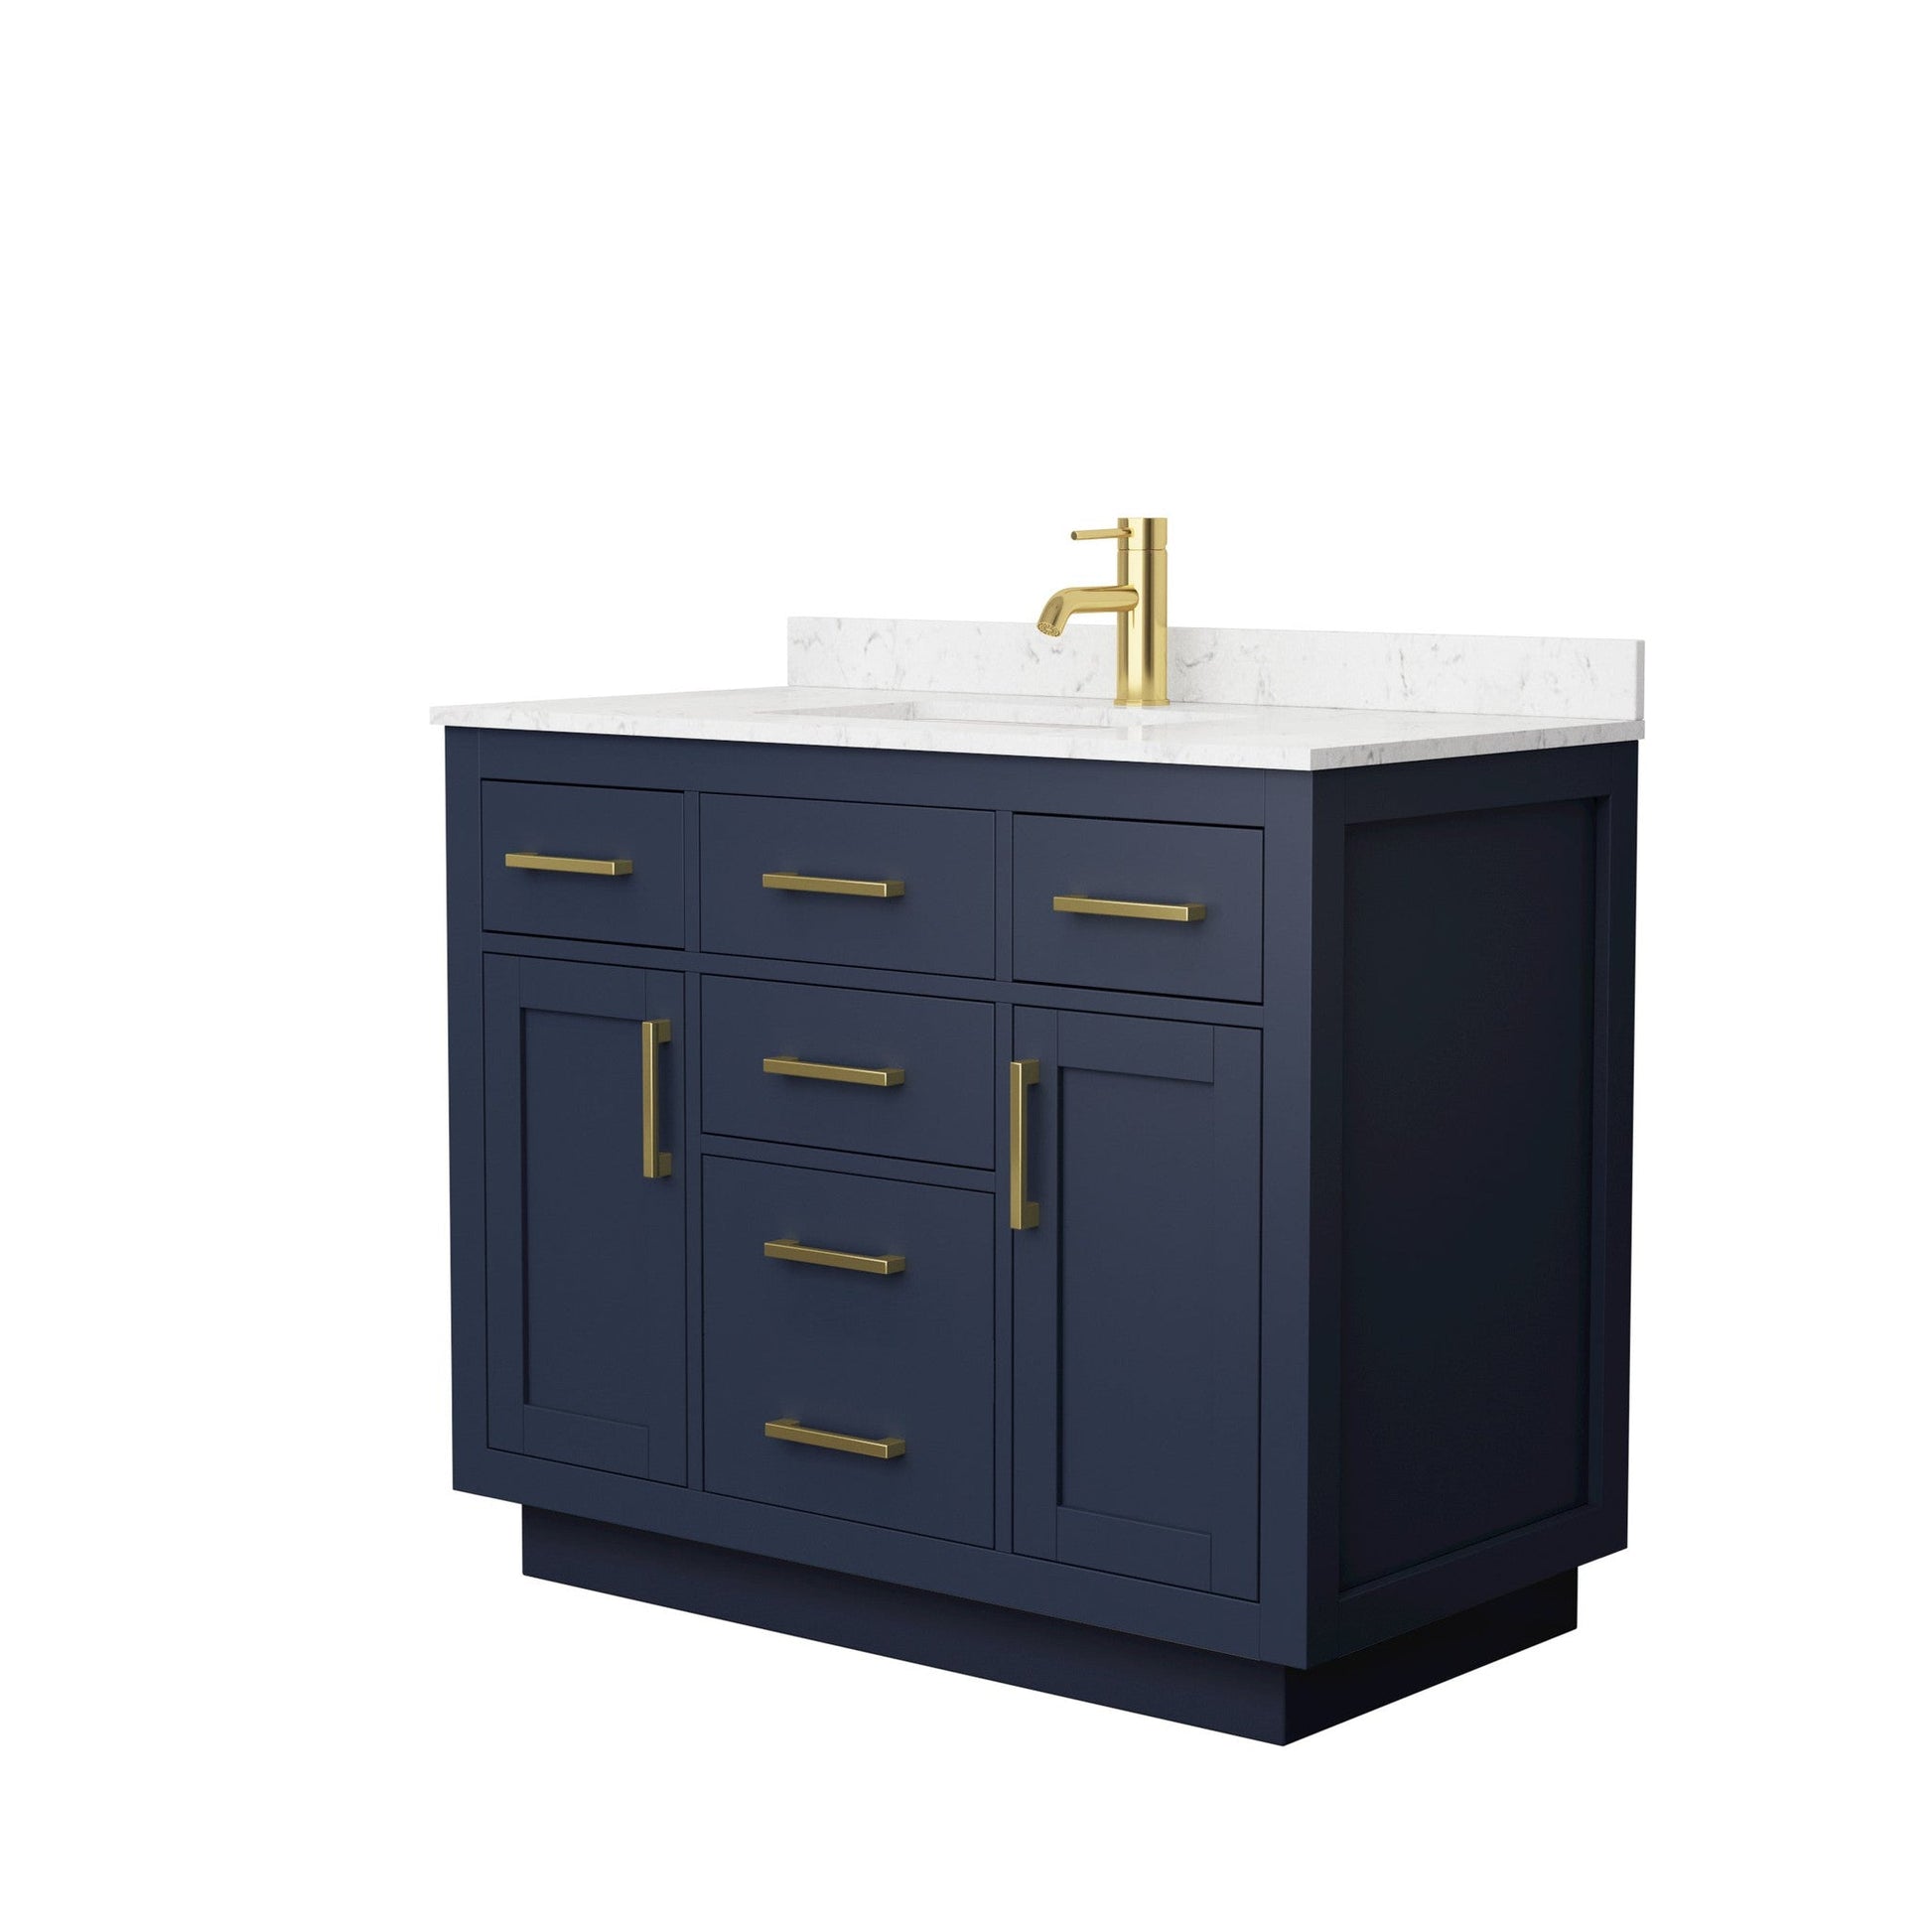 Beckett 42" Single Bathroom Vanity With Toe Kick in Dark Blue, Carrara Cultured Marble Countertop, Undermount Square Sink, Brushed Gold Trim